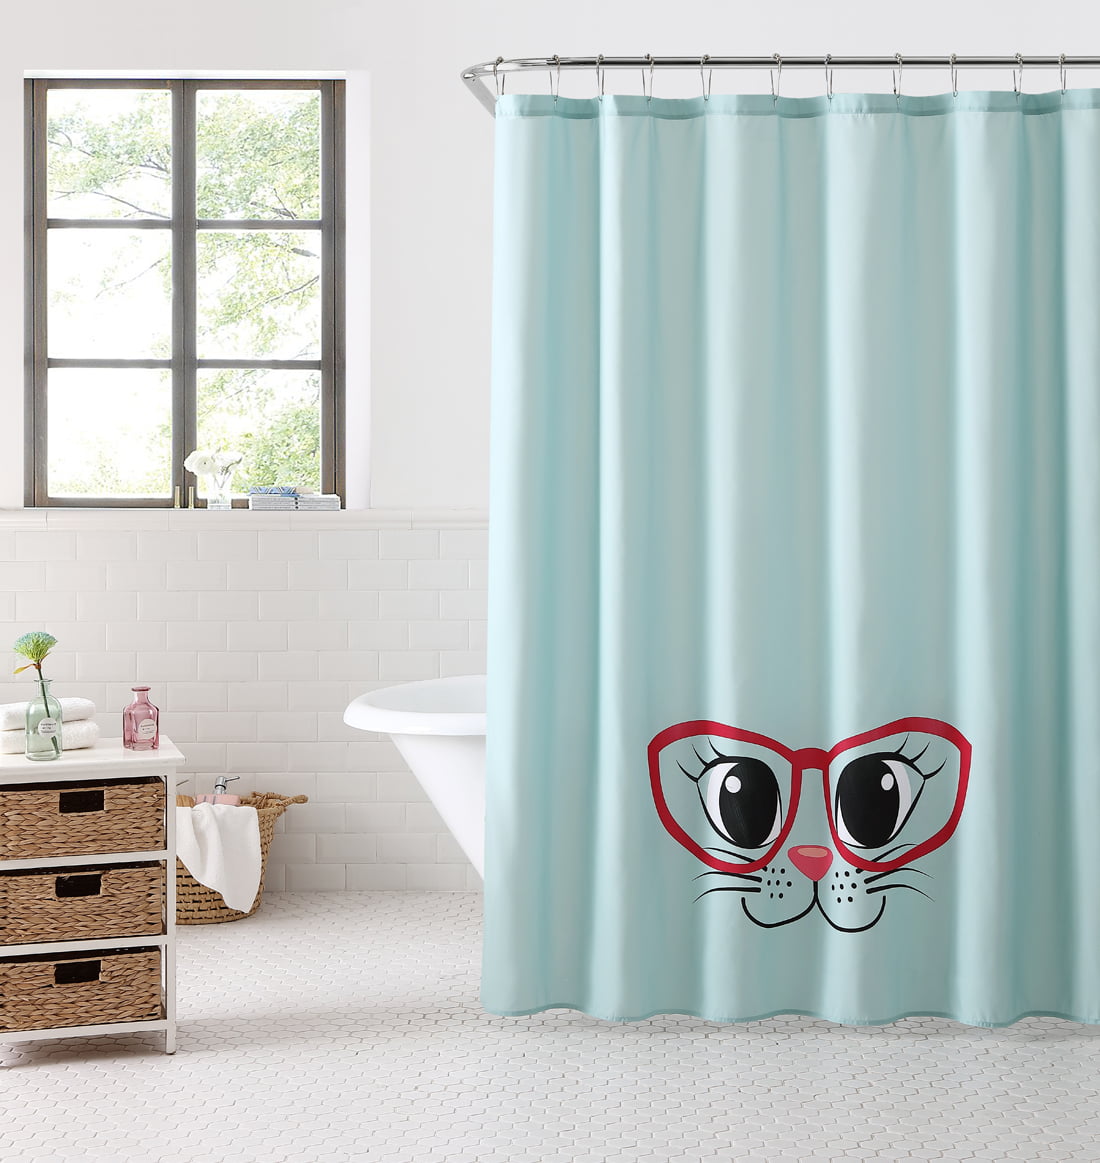 Descendants 3 Printed Waterproof Shower Curtain With 12 Hooks Set Bathroom Decor 